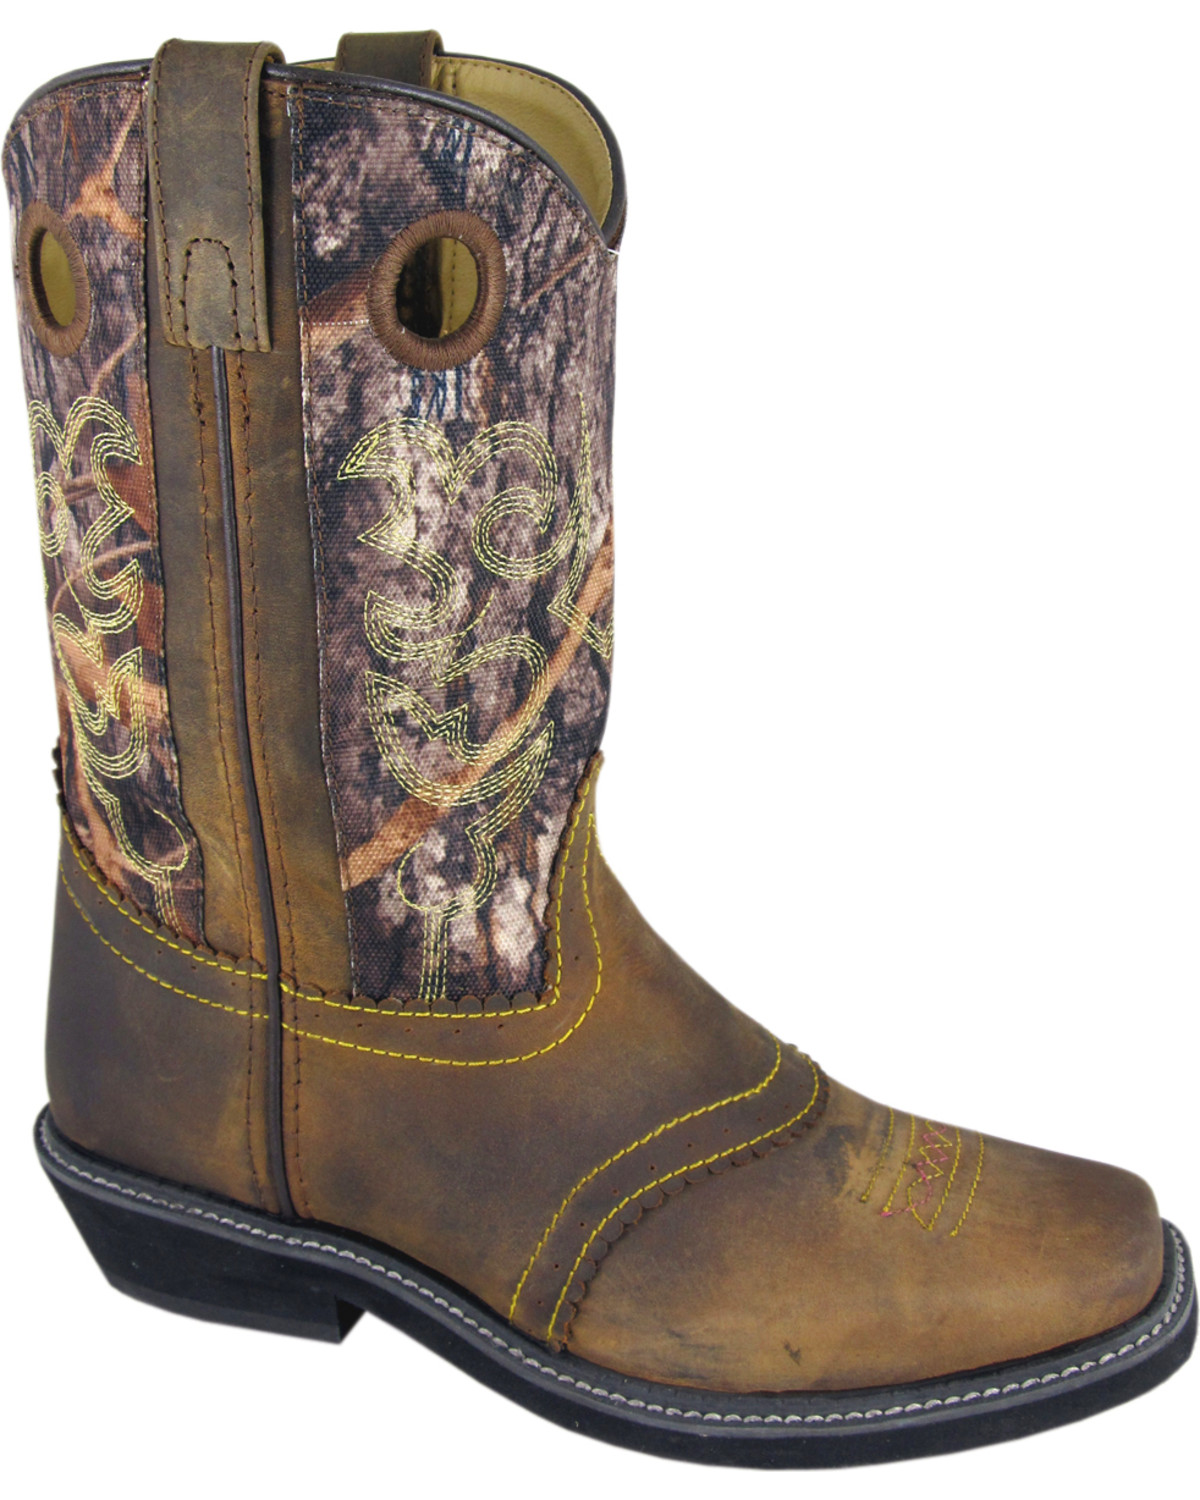 camo cowboy boots